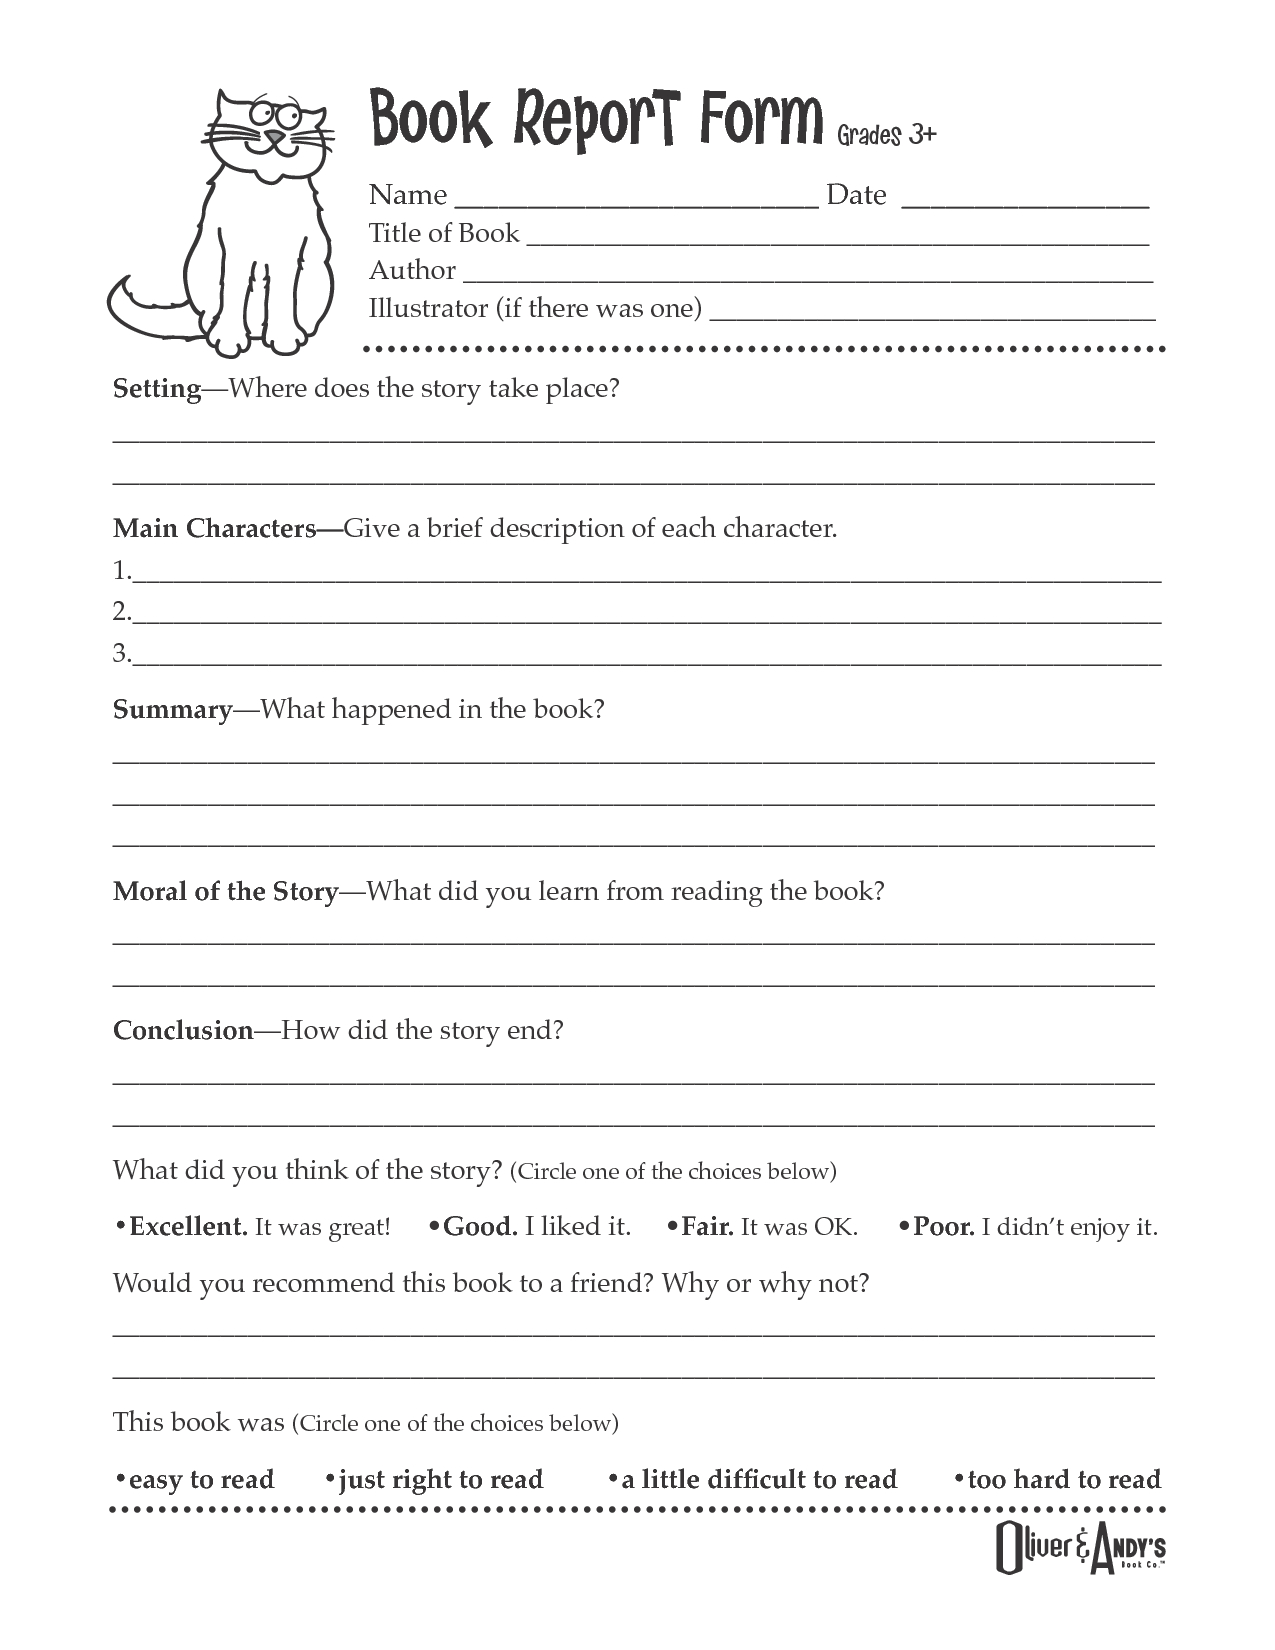 Second Grade Book Report Template | Book Report Form Grades With Regard To 2Nd Grade Book Report Template